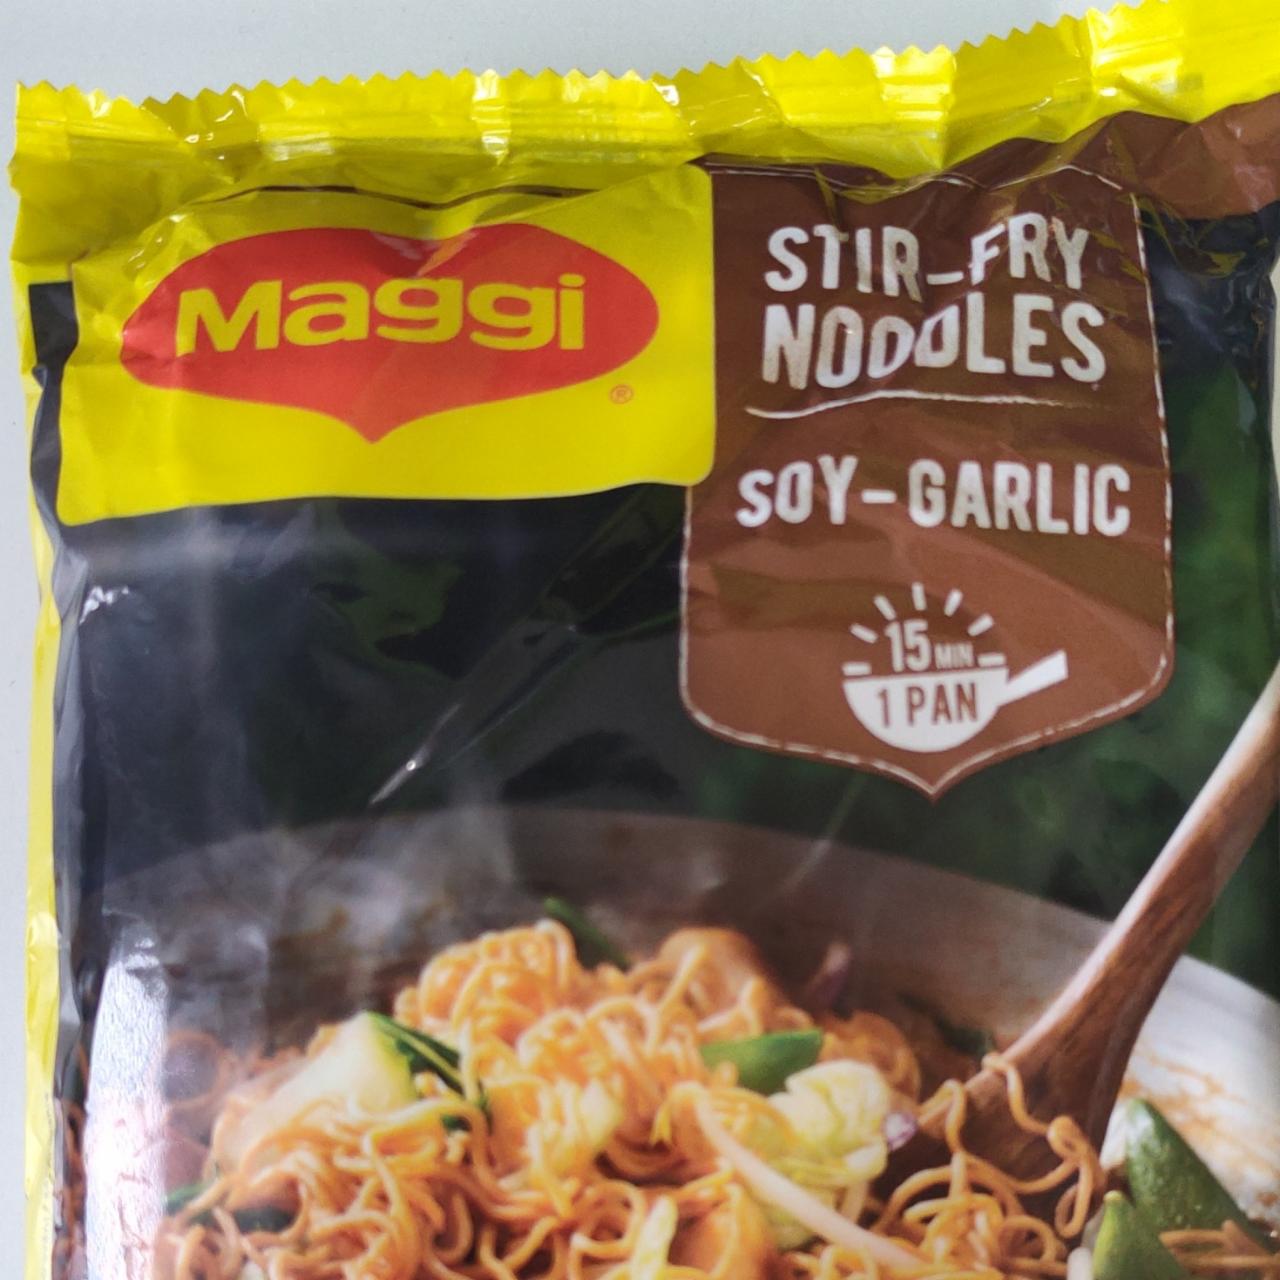 Fotografie - Stir-fry noodles soy garlic Maggi